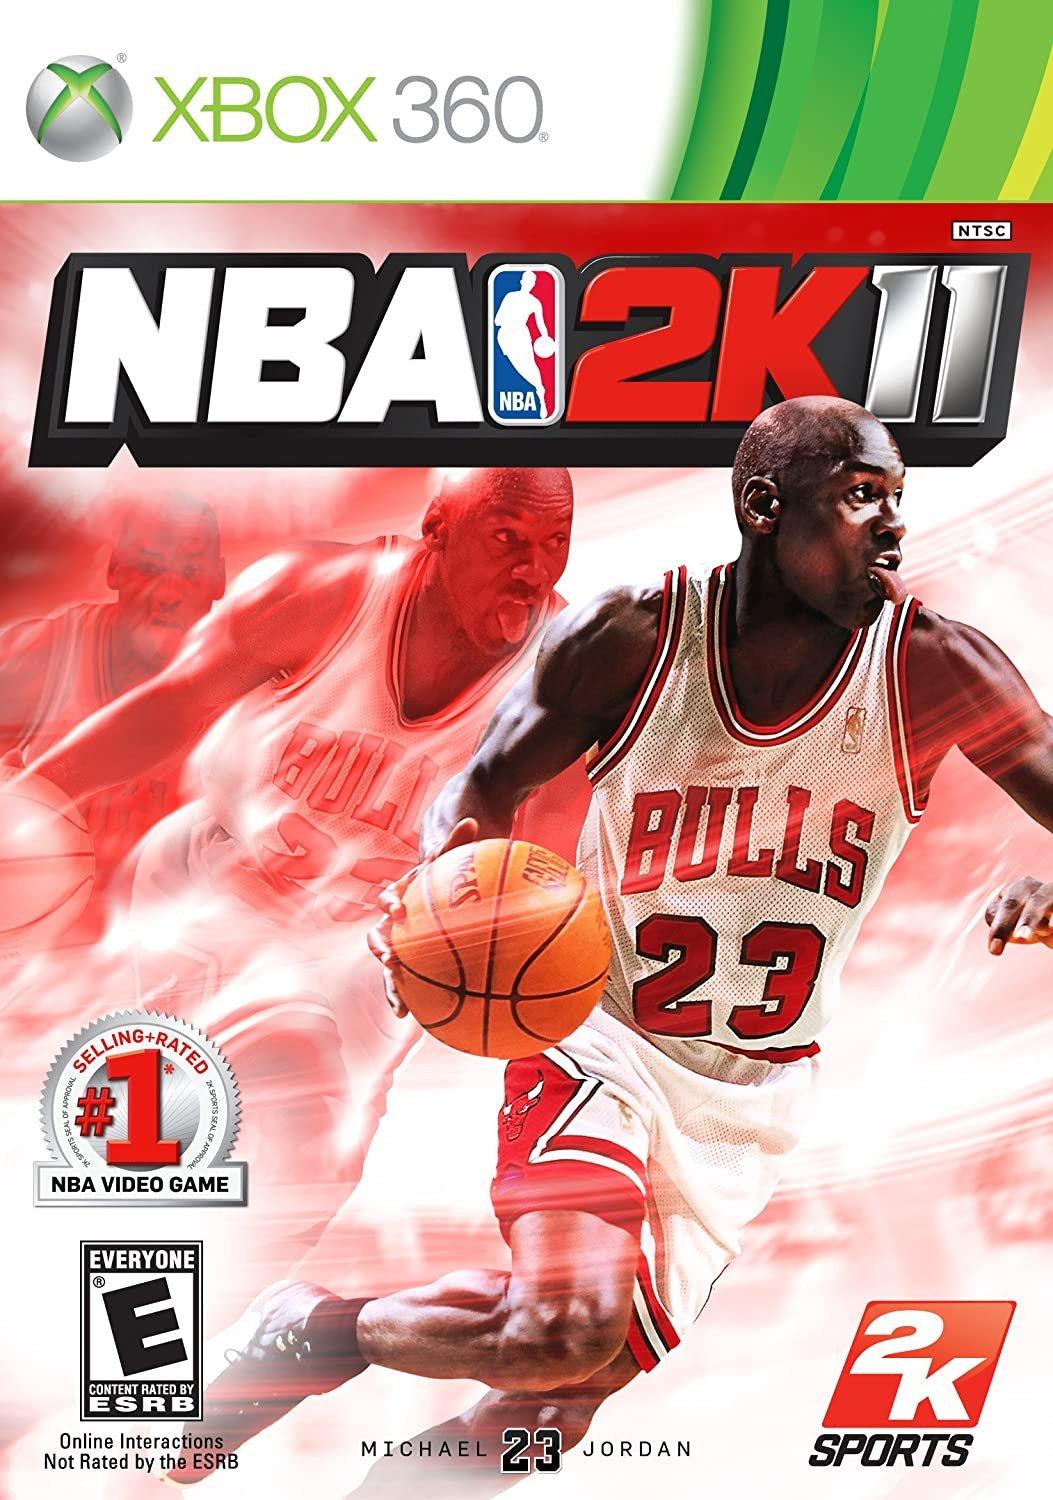 NBA 2K11 - Xbox 360, Xbox 360